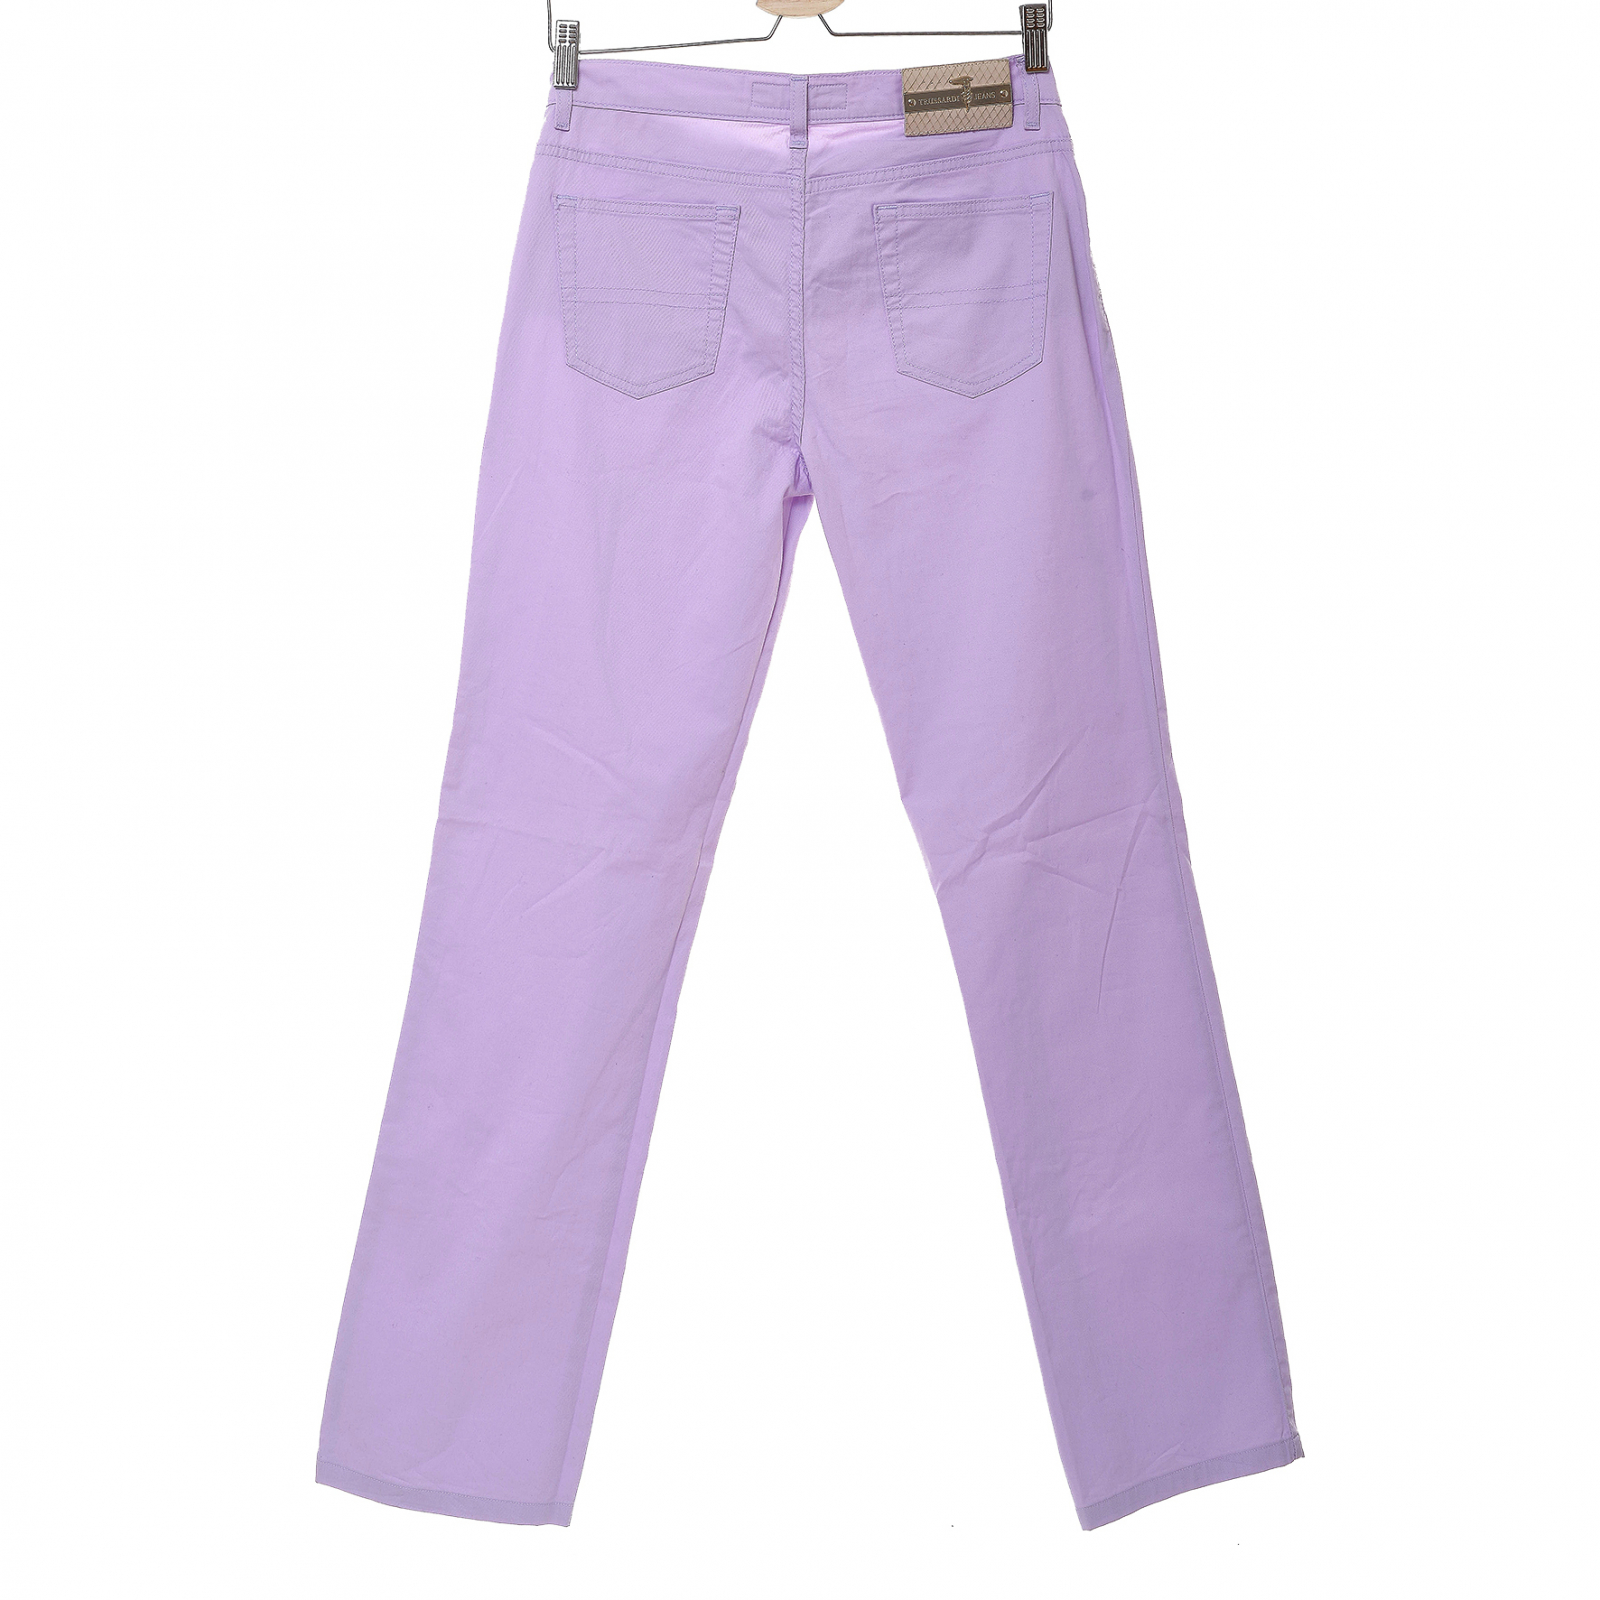 Spodnie fioletowe